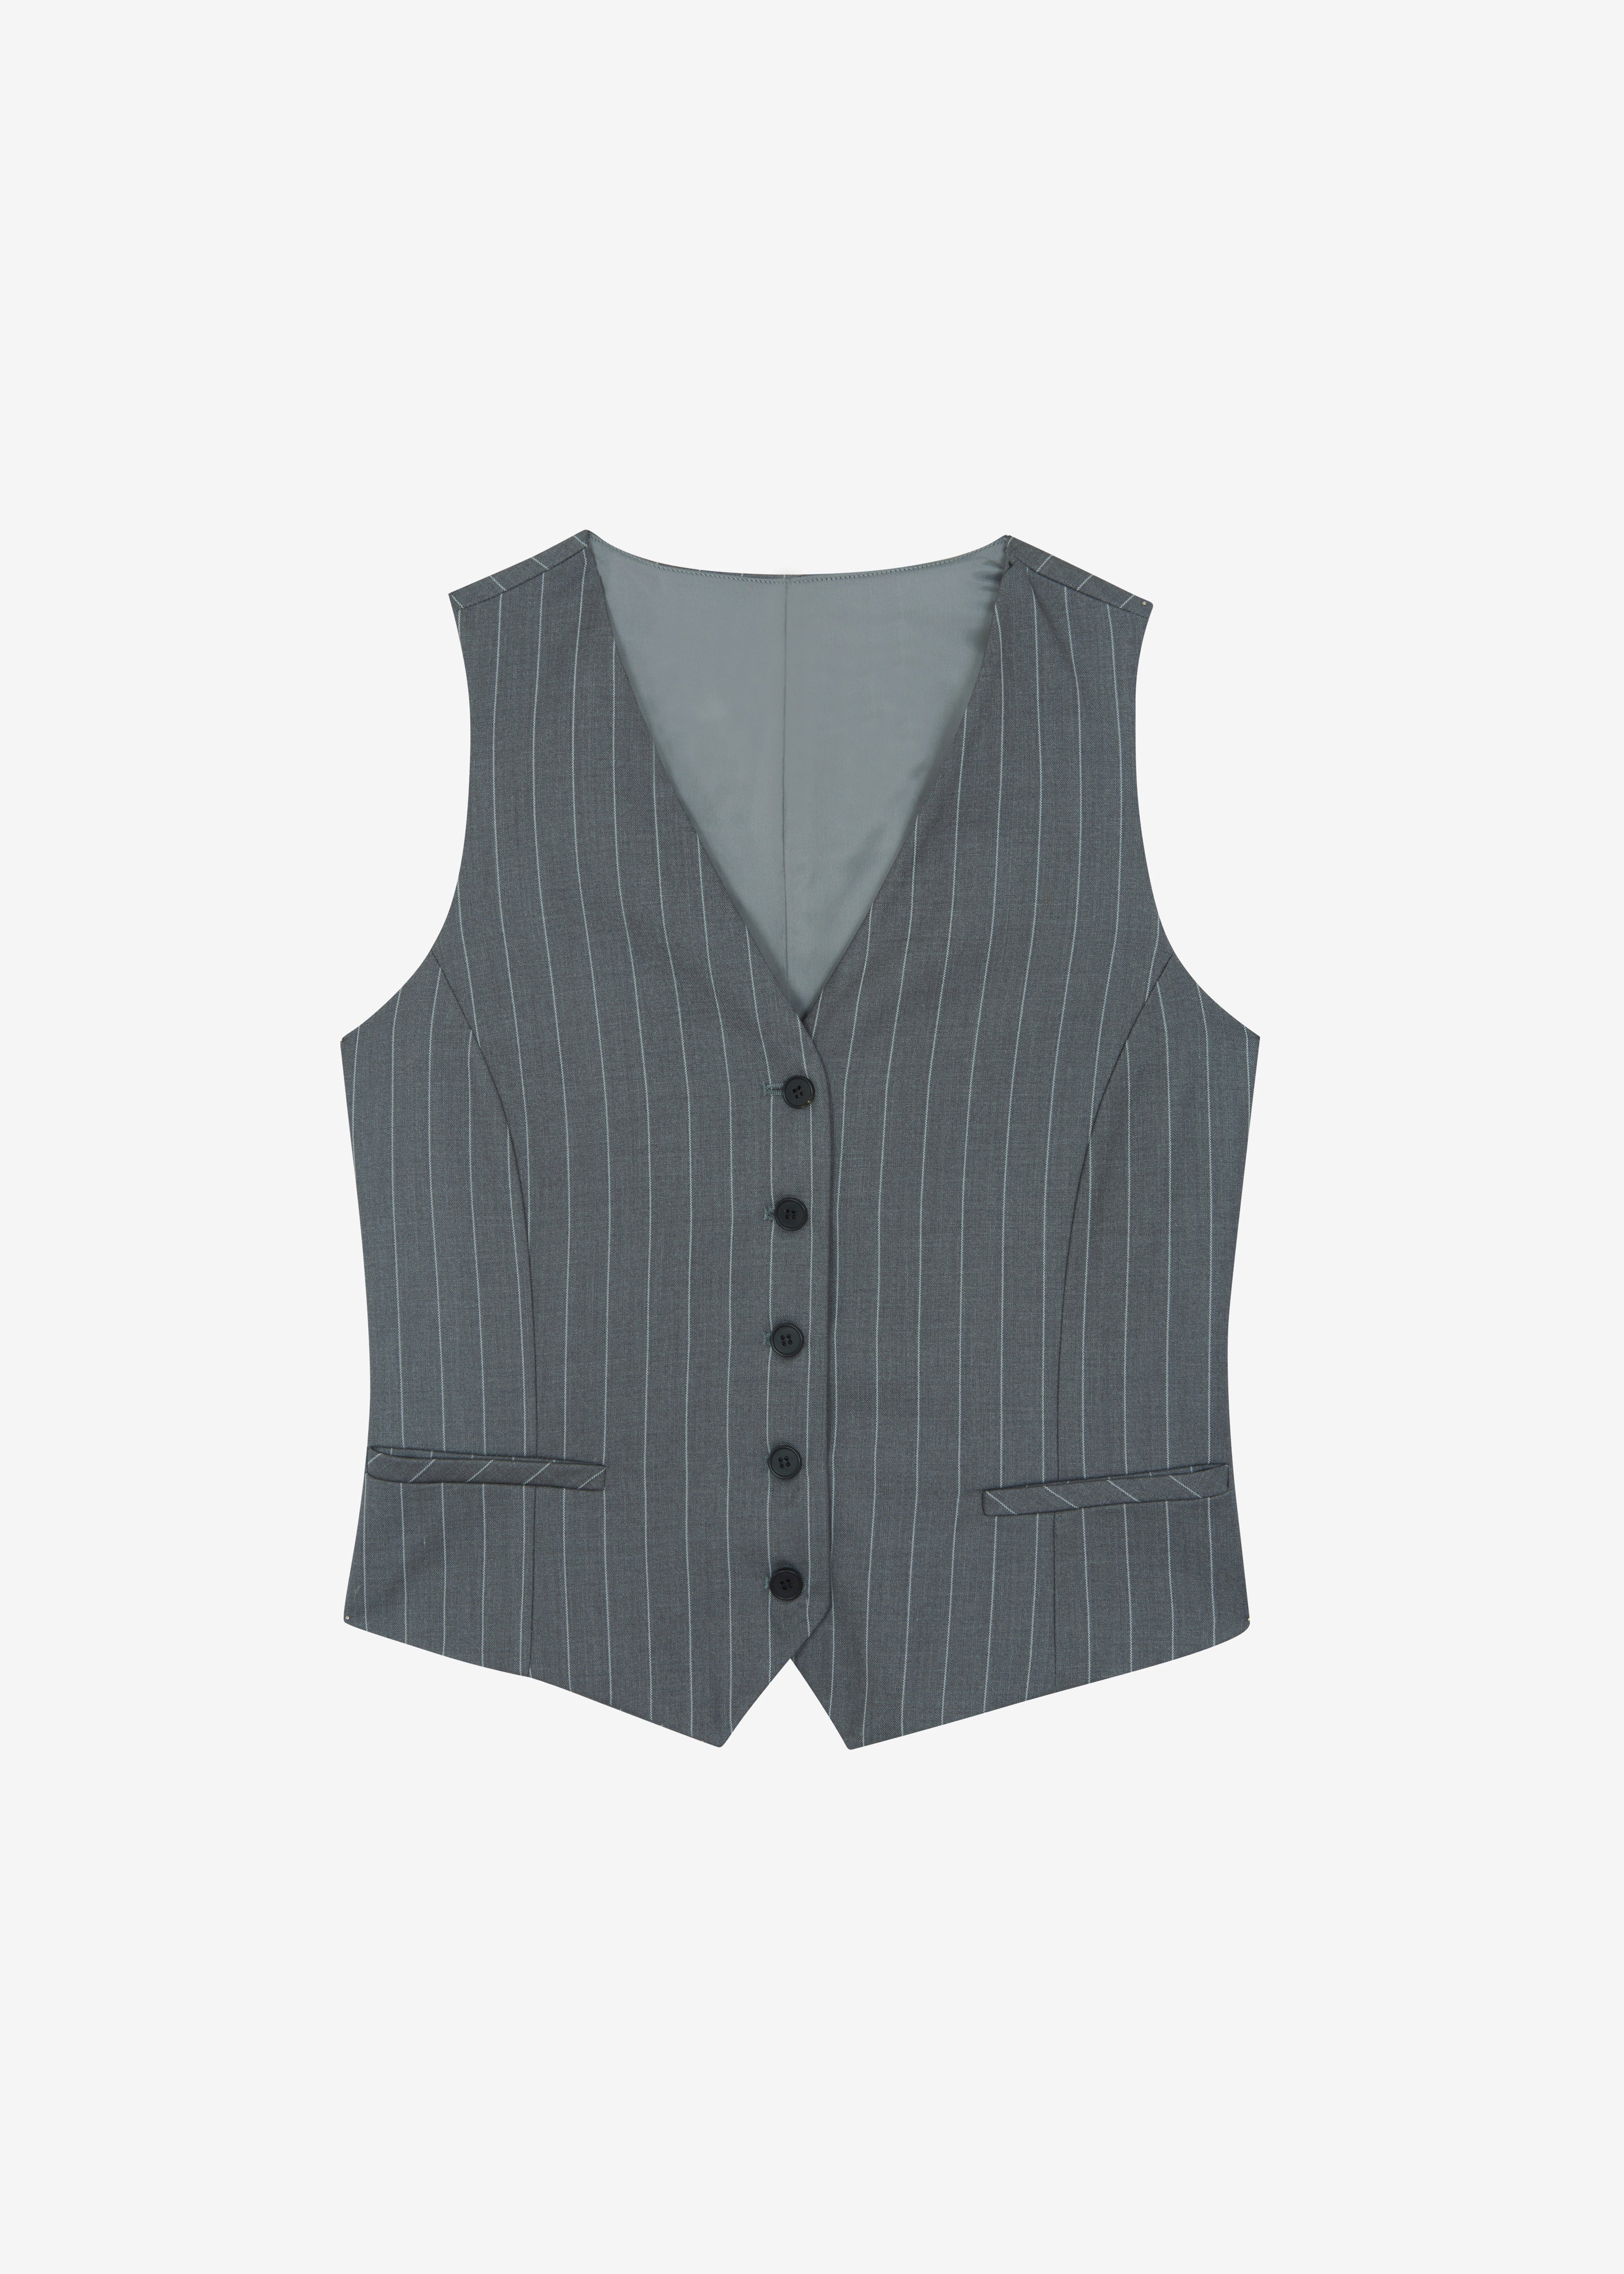 Holland Suit Vest - Charcoal/White Pinstripe - 12